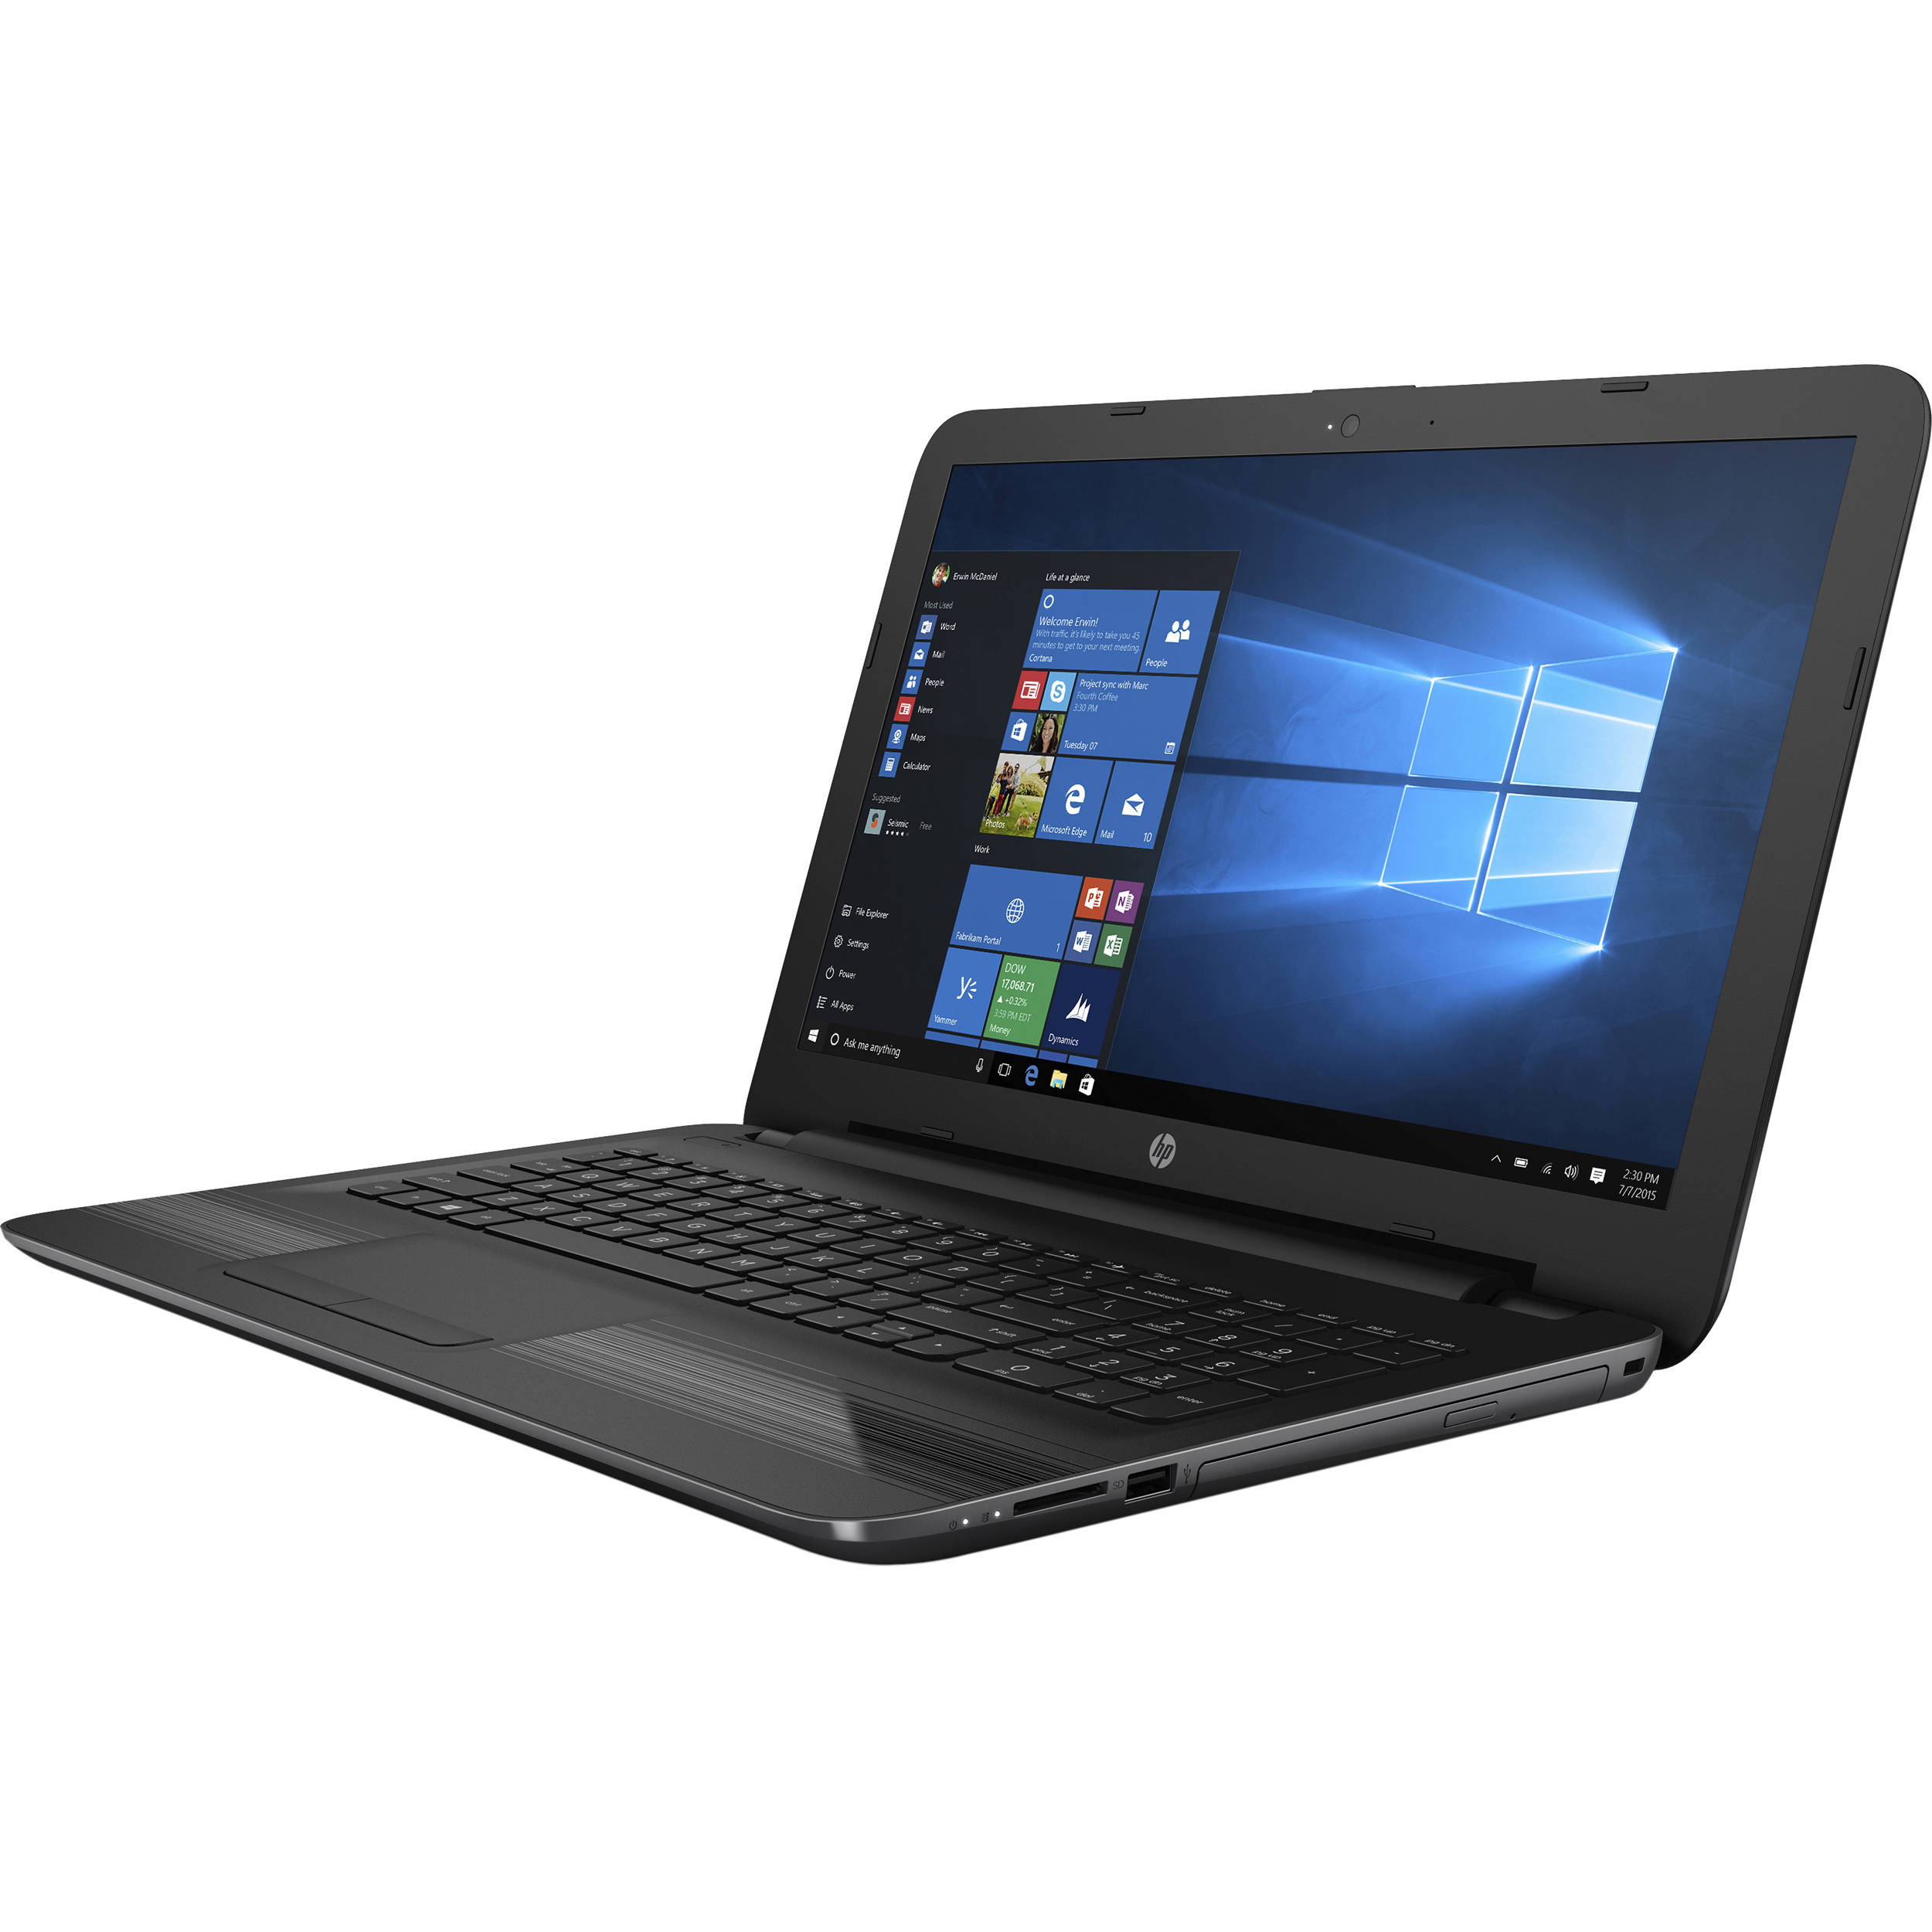 HP 15 G5 Mobile Workstation Notebook, Intel Core i7-8750H CPU, 16GB RAM, 256GB SSD, 15.6